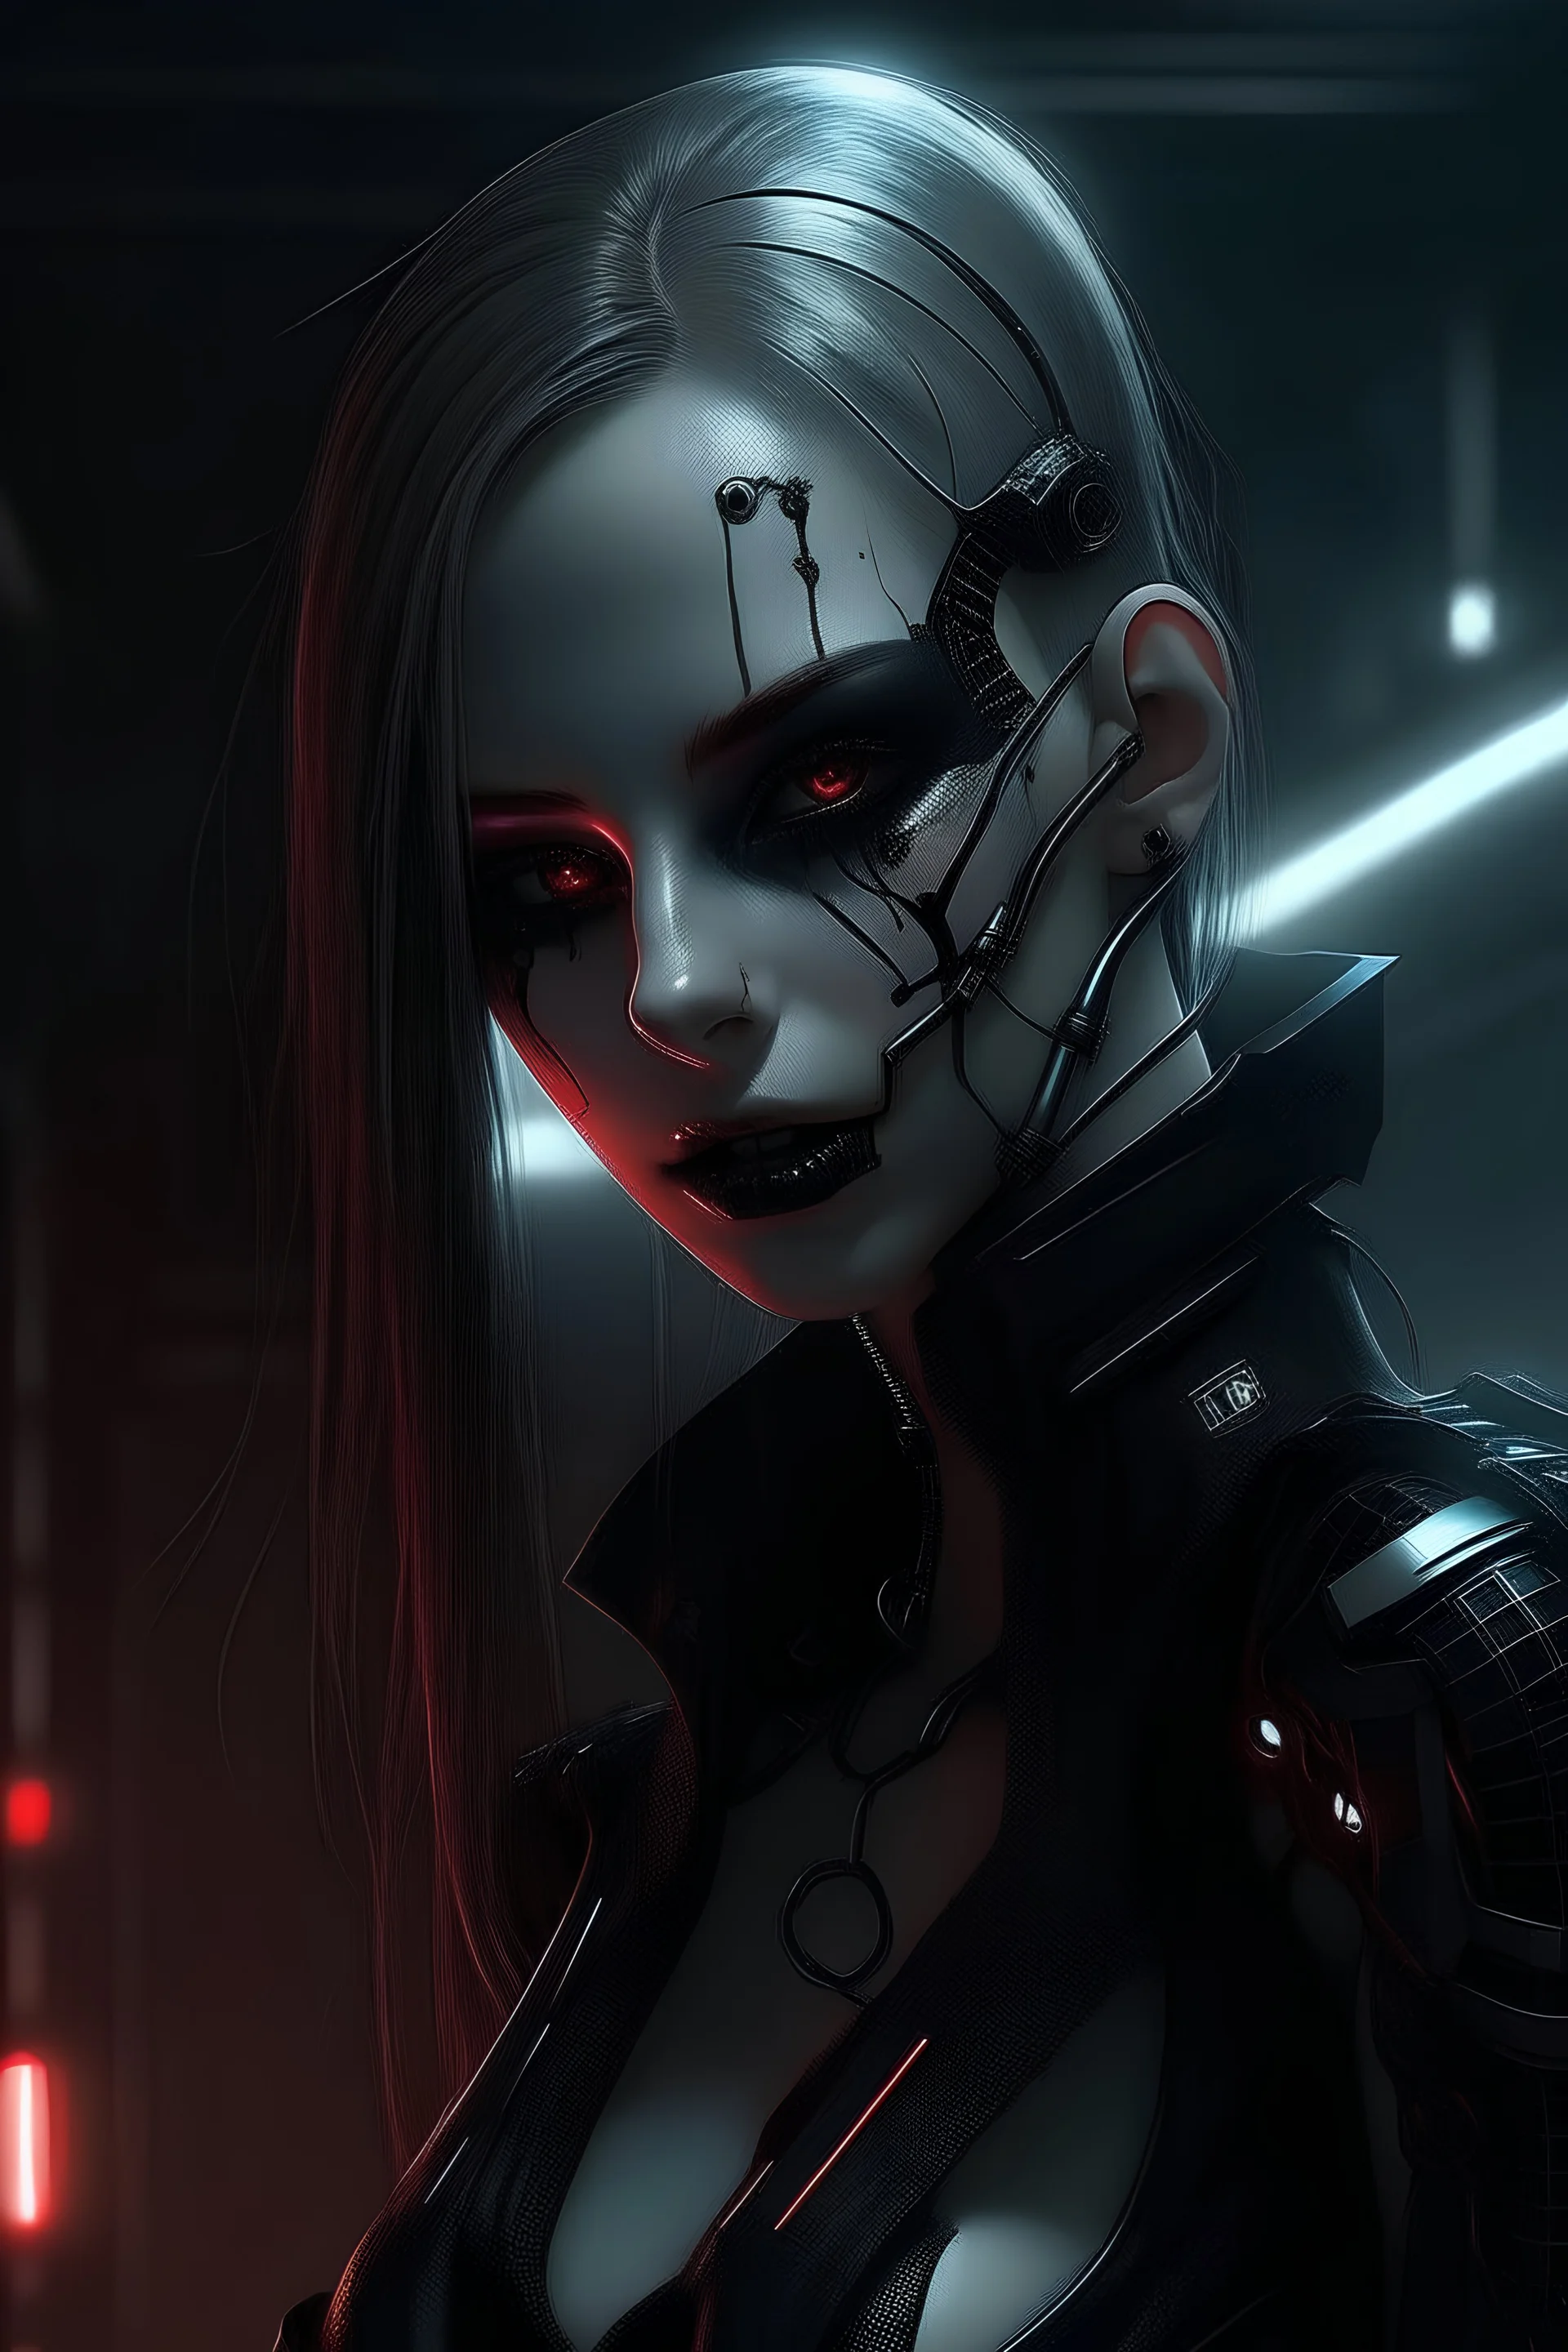 Vampire cyborg gothic cyberpunk